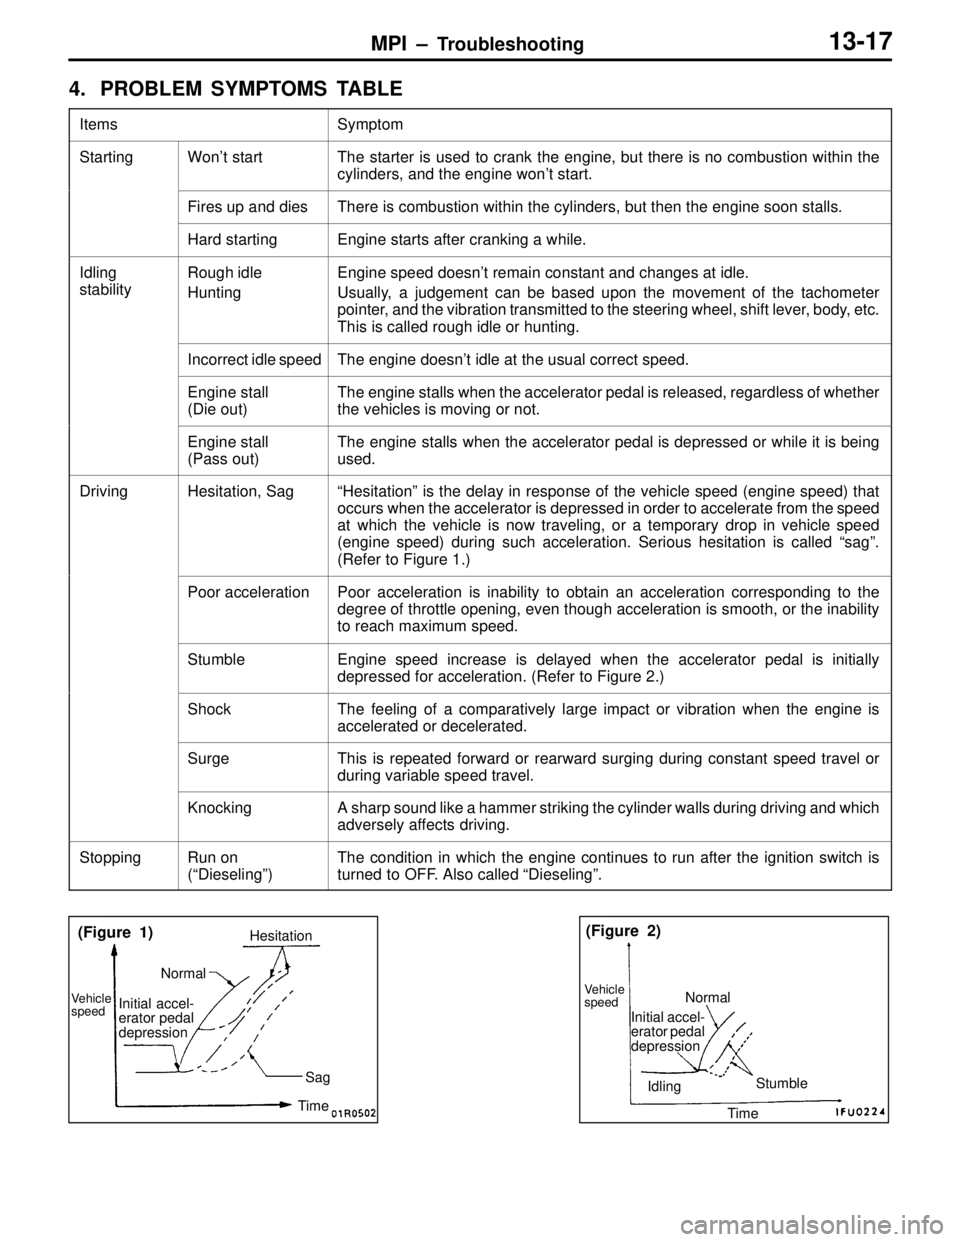 MITSUBISHI LANCER EVOLUTION IV 1998  Workshop Manual MPI – Troubleshooting
Vehicle
speedInitial accel-
erator pedal
depression
NormalHesitation
Sag
Time
(Figure 1)(Figure 2)
Normal
Initial accel-
erator pedal
depression
IdlingStumble
TimeVehicle
speed